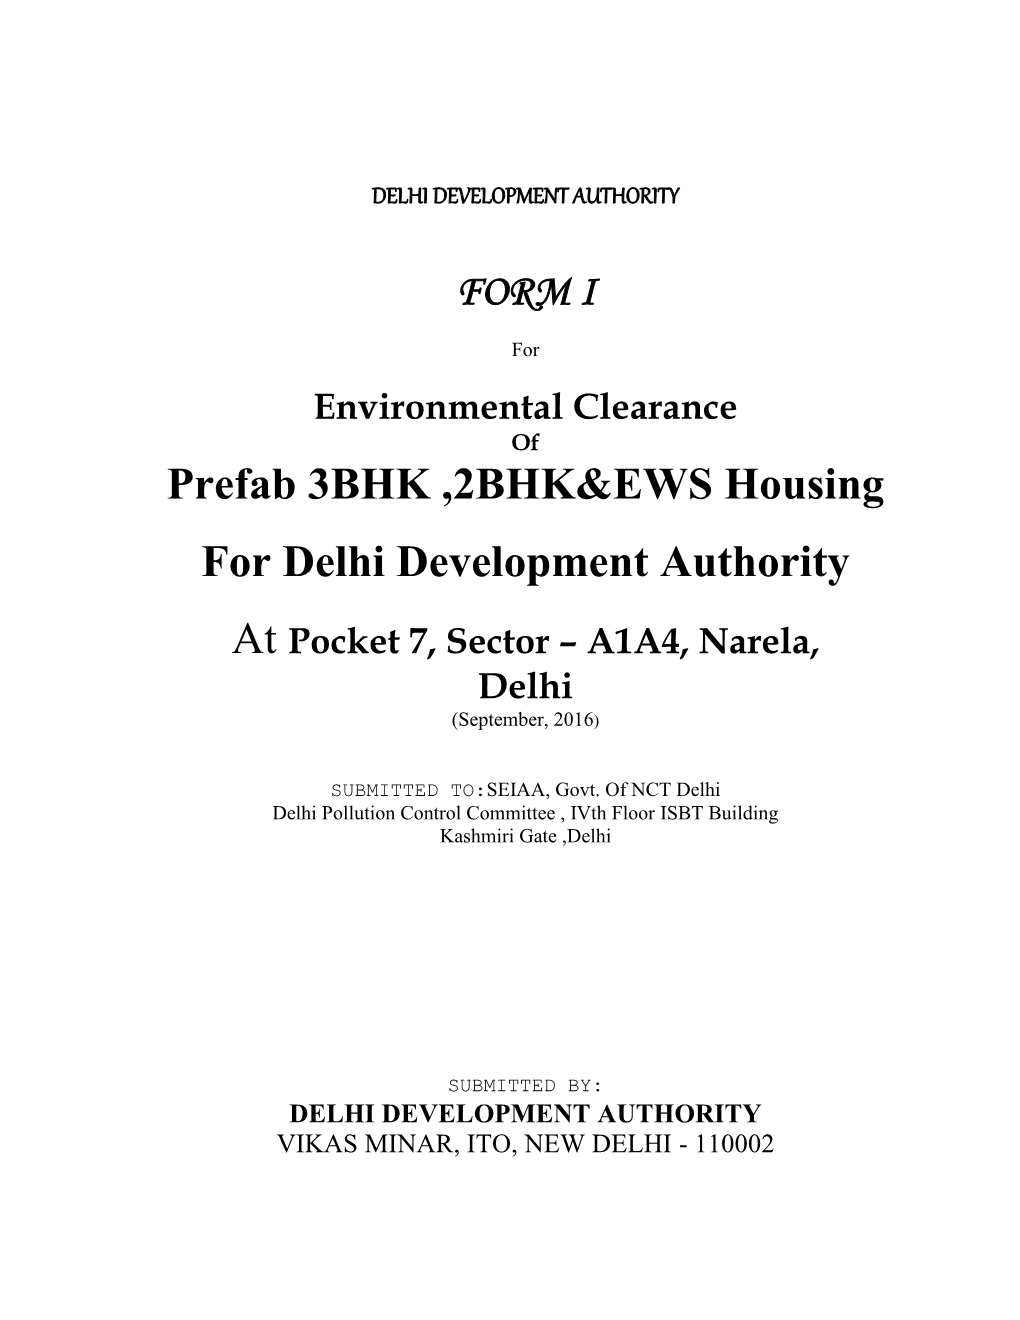 Prefab 3BHK ,2BHK&EWS Housing for Delhi Development Authority